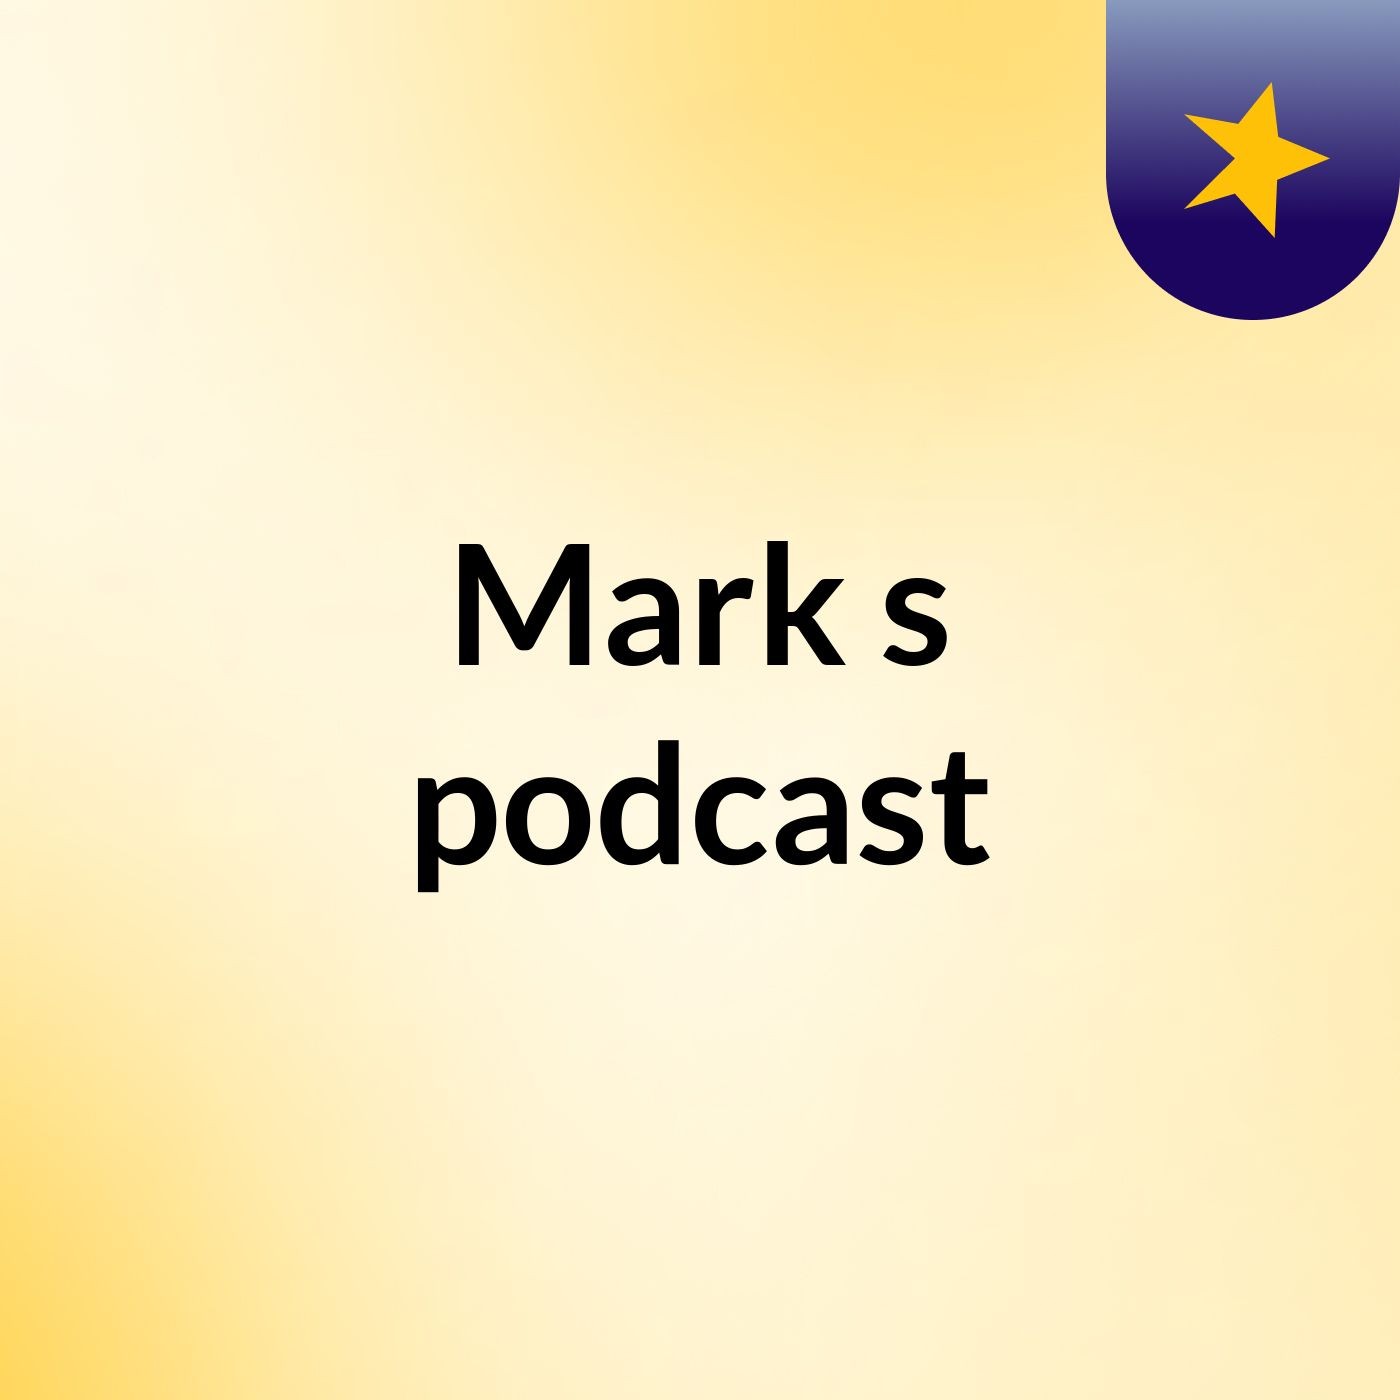 Episode 6 - Mark's podcast